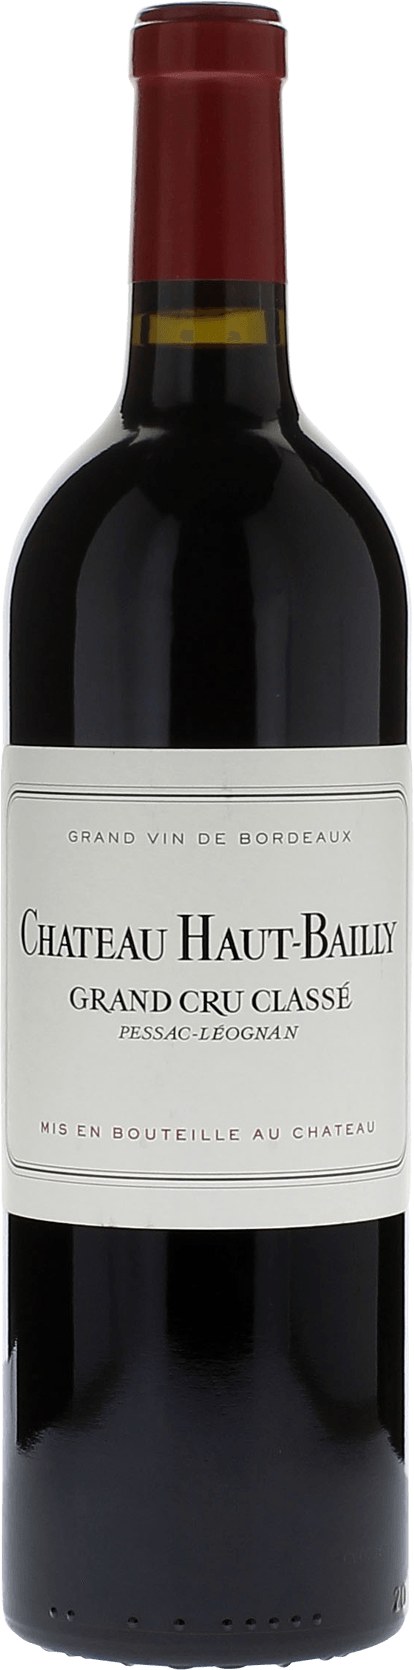 Haut bailly 2005 cru class Pessac-Lognan, Bordeaux rouge